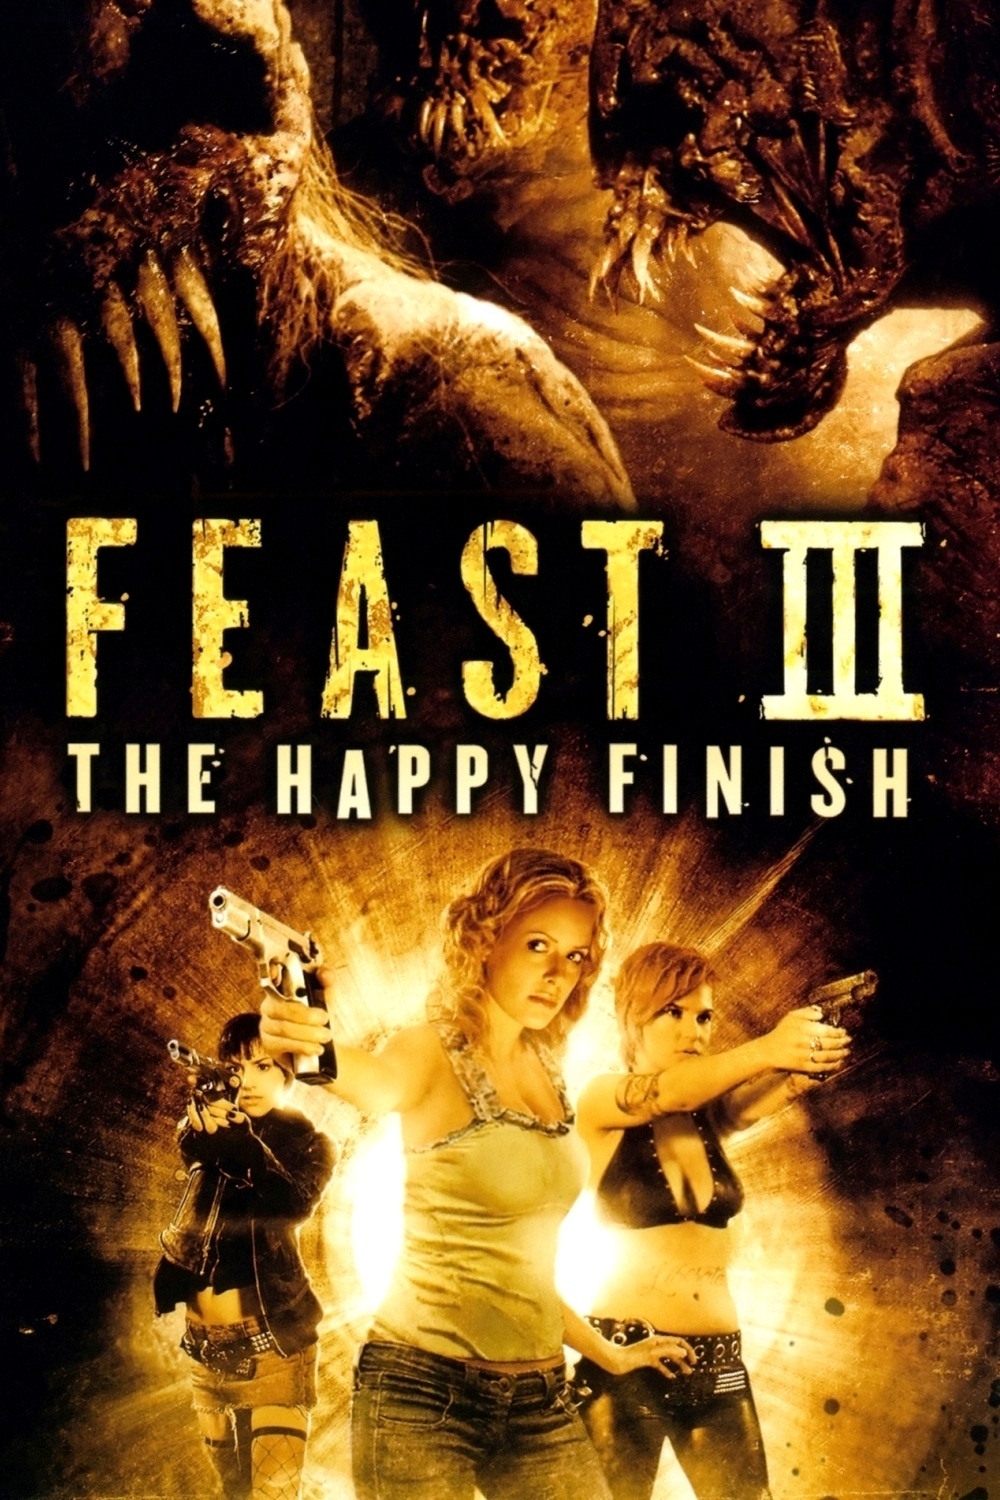 Feast III The Happy Finish (2009) พันธุ์ขย้ำเขี้ยวเขมือบโลก 3 Jenny Wade